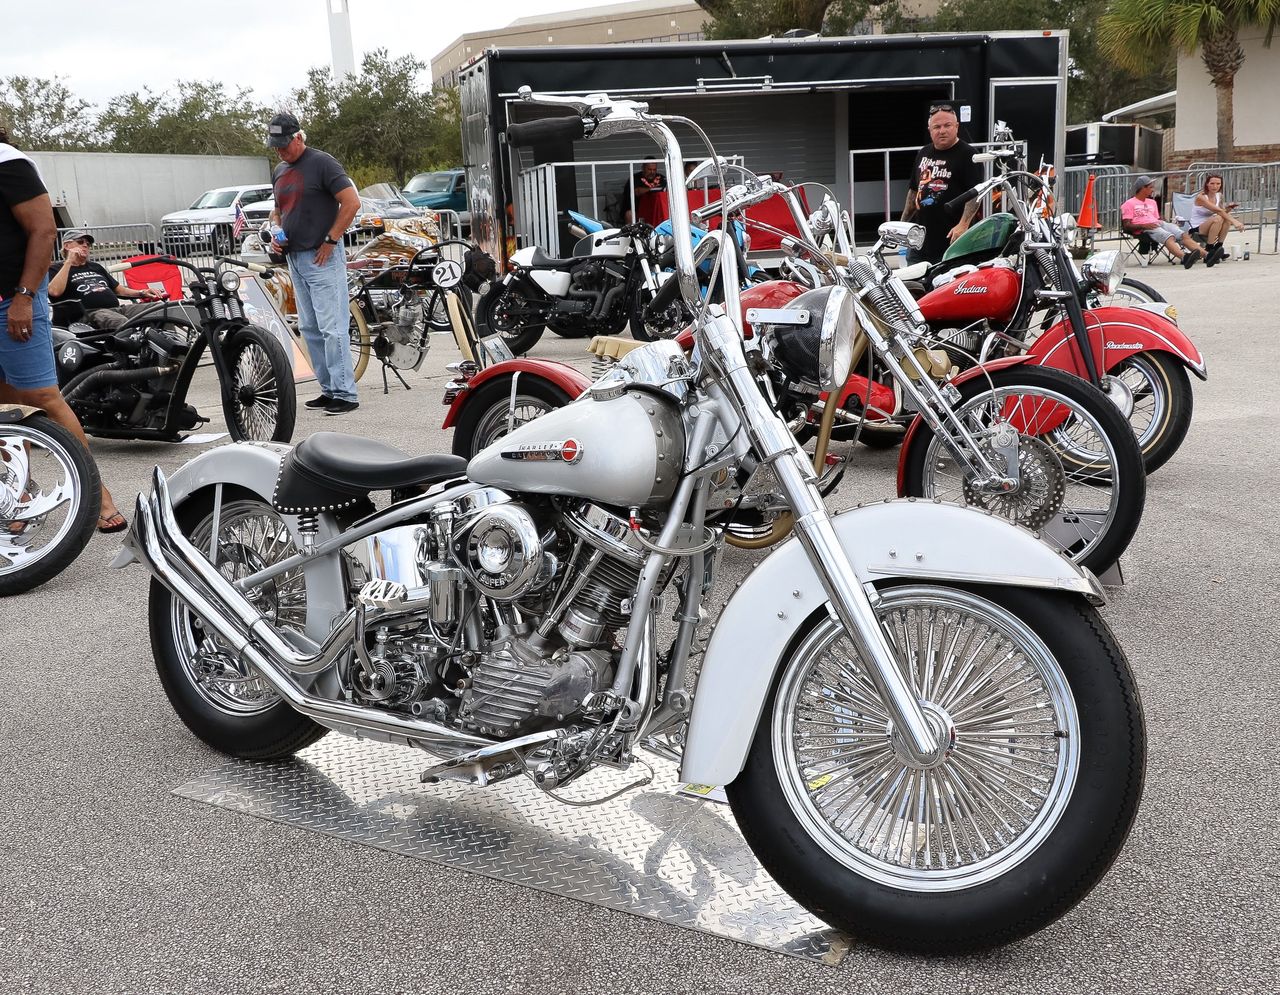 A custom Harley